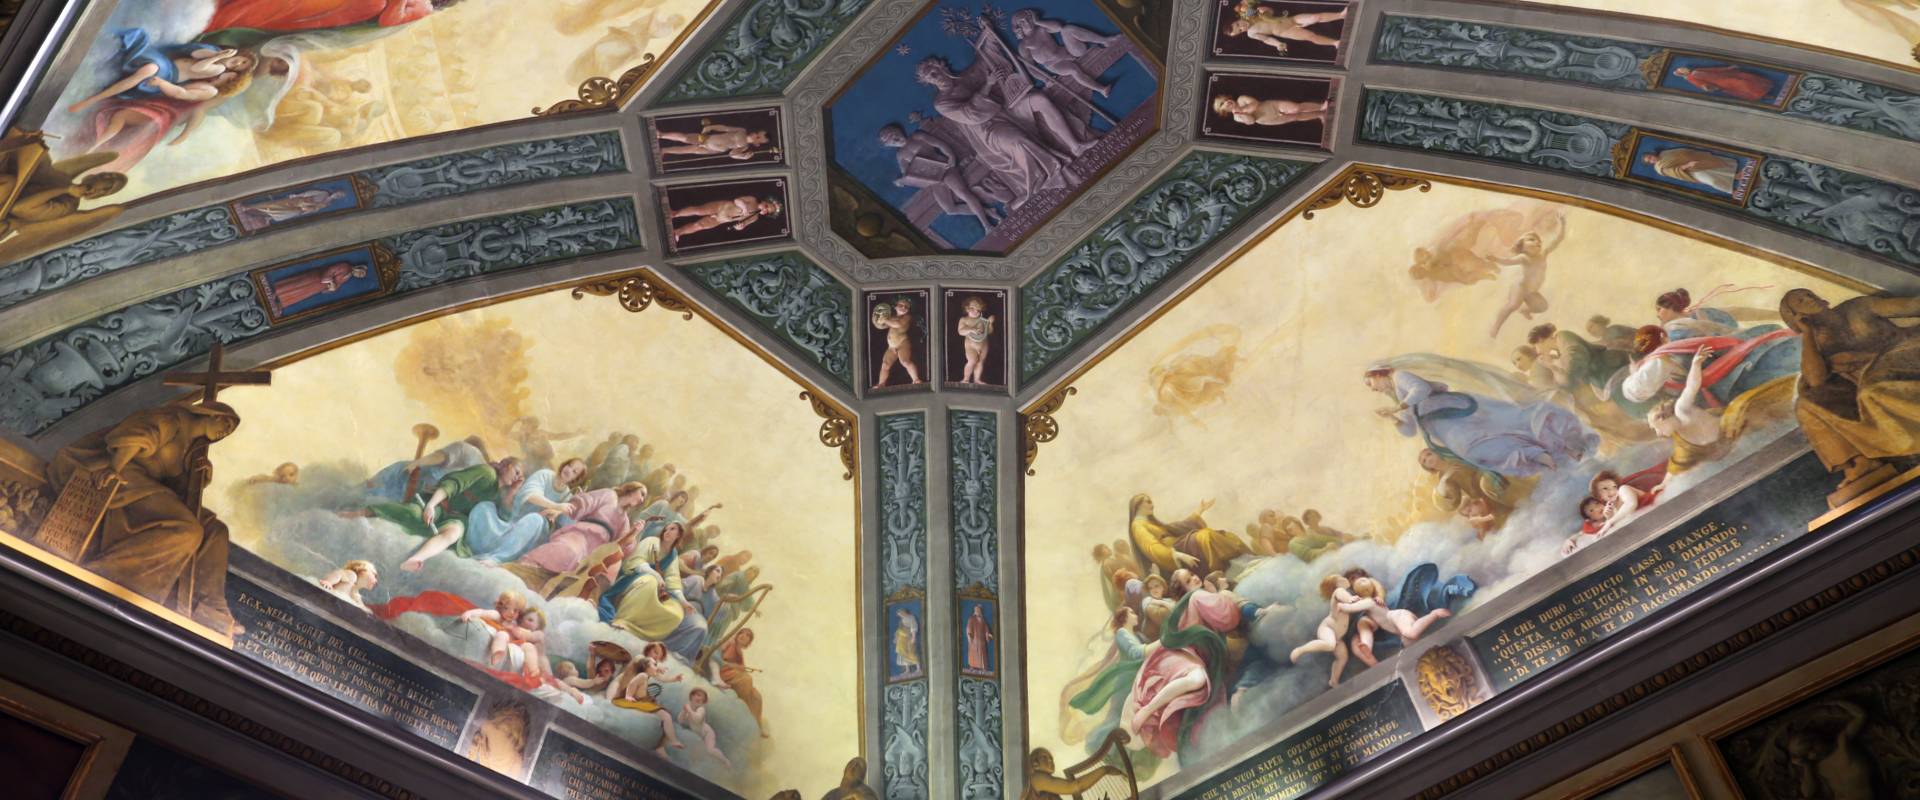 Parma, biblioteca palatina, sala di dante, decorata da francesco scaramuzza, 1843-57, 02 photo by Sailko